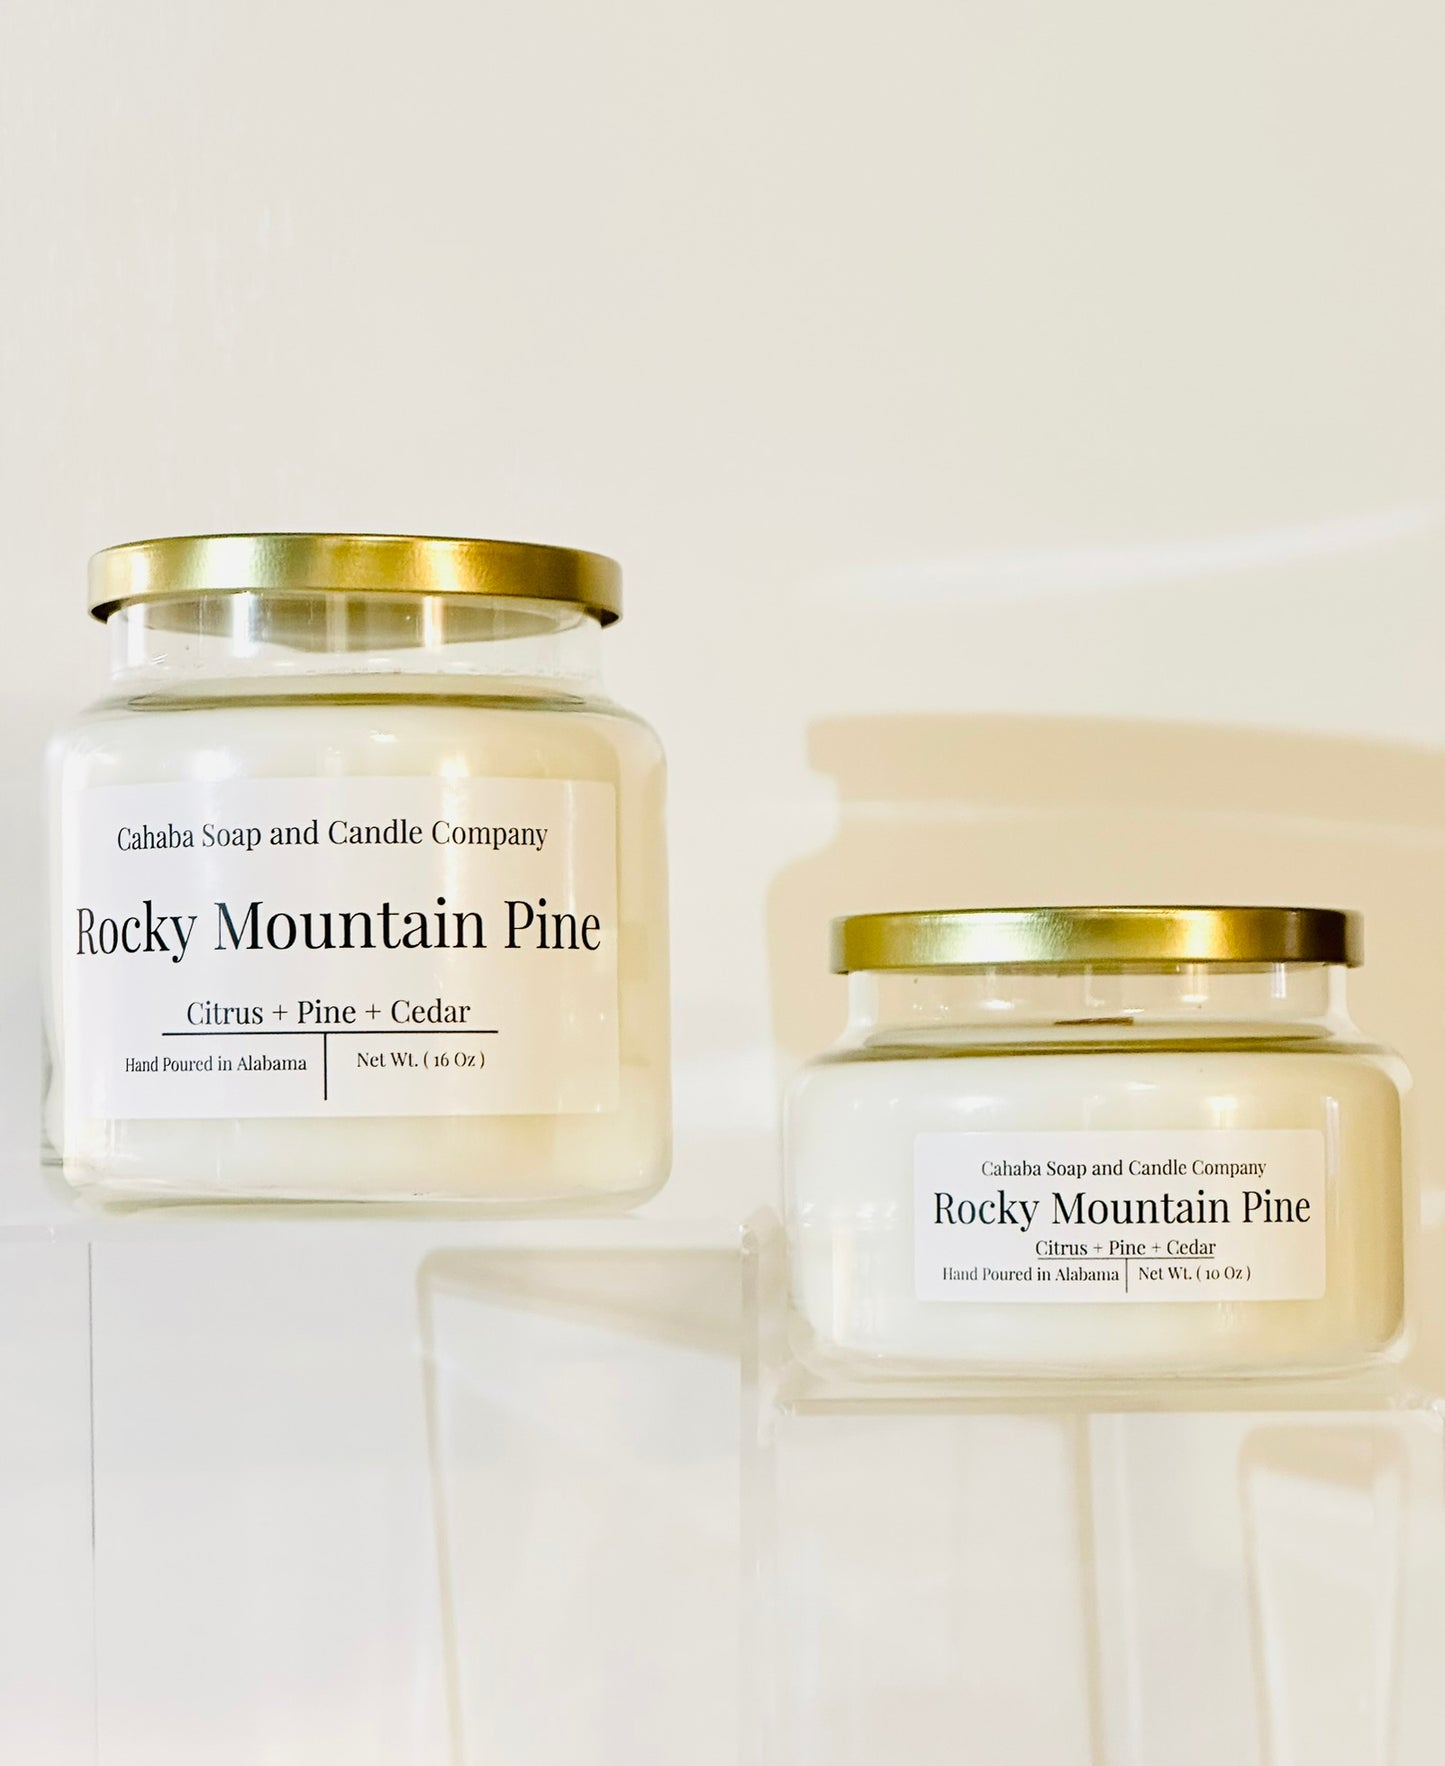 Rocky Mountain Pine - Cahaba Soap and Candle Company